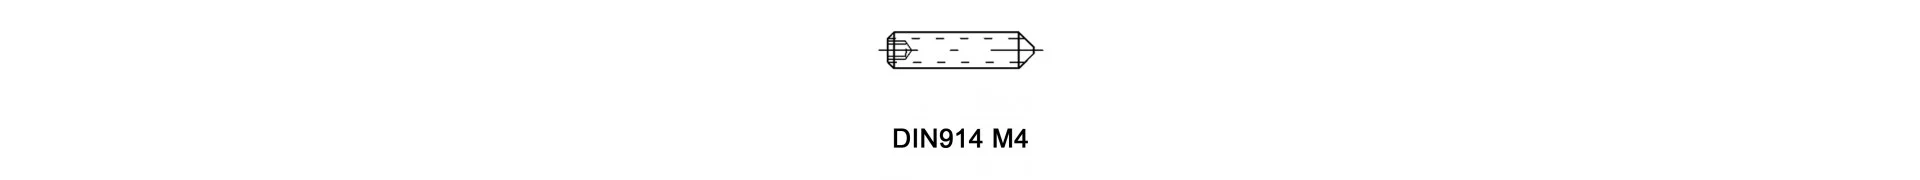 DIN914 M4